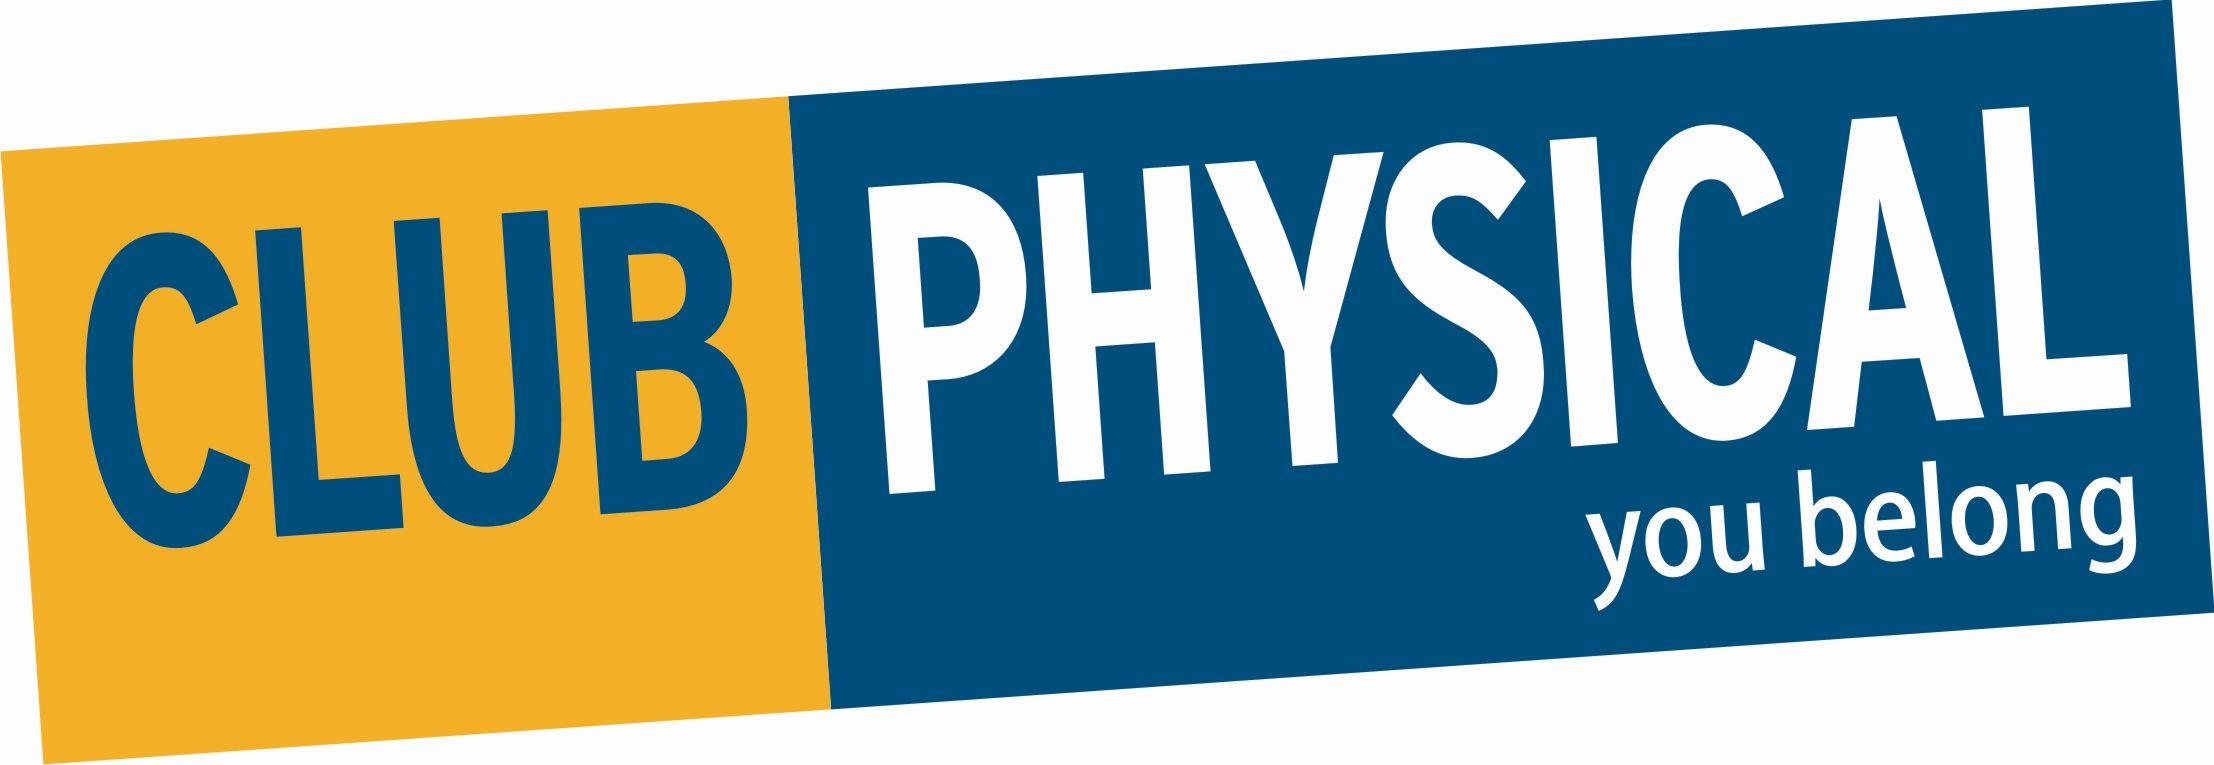 Physical Logo - Gym Auckland | Auckland Health Club | Weight Loss | Club Physical